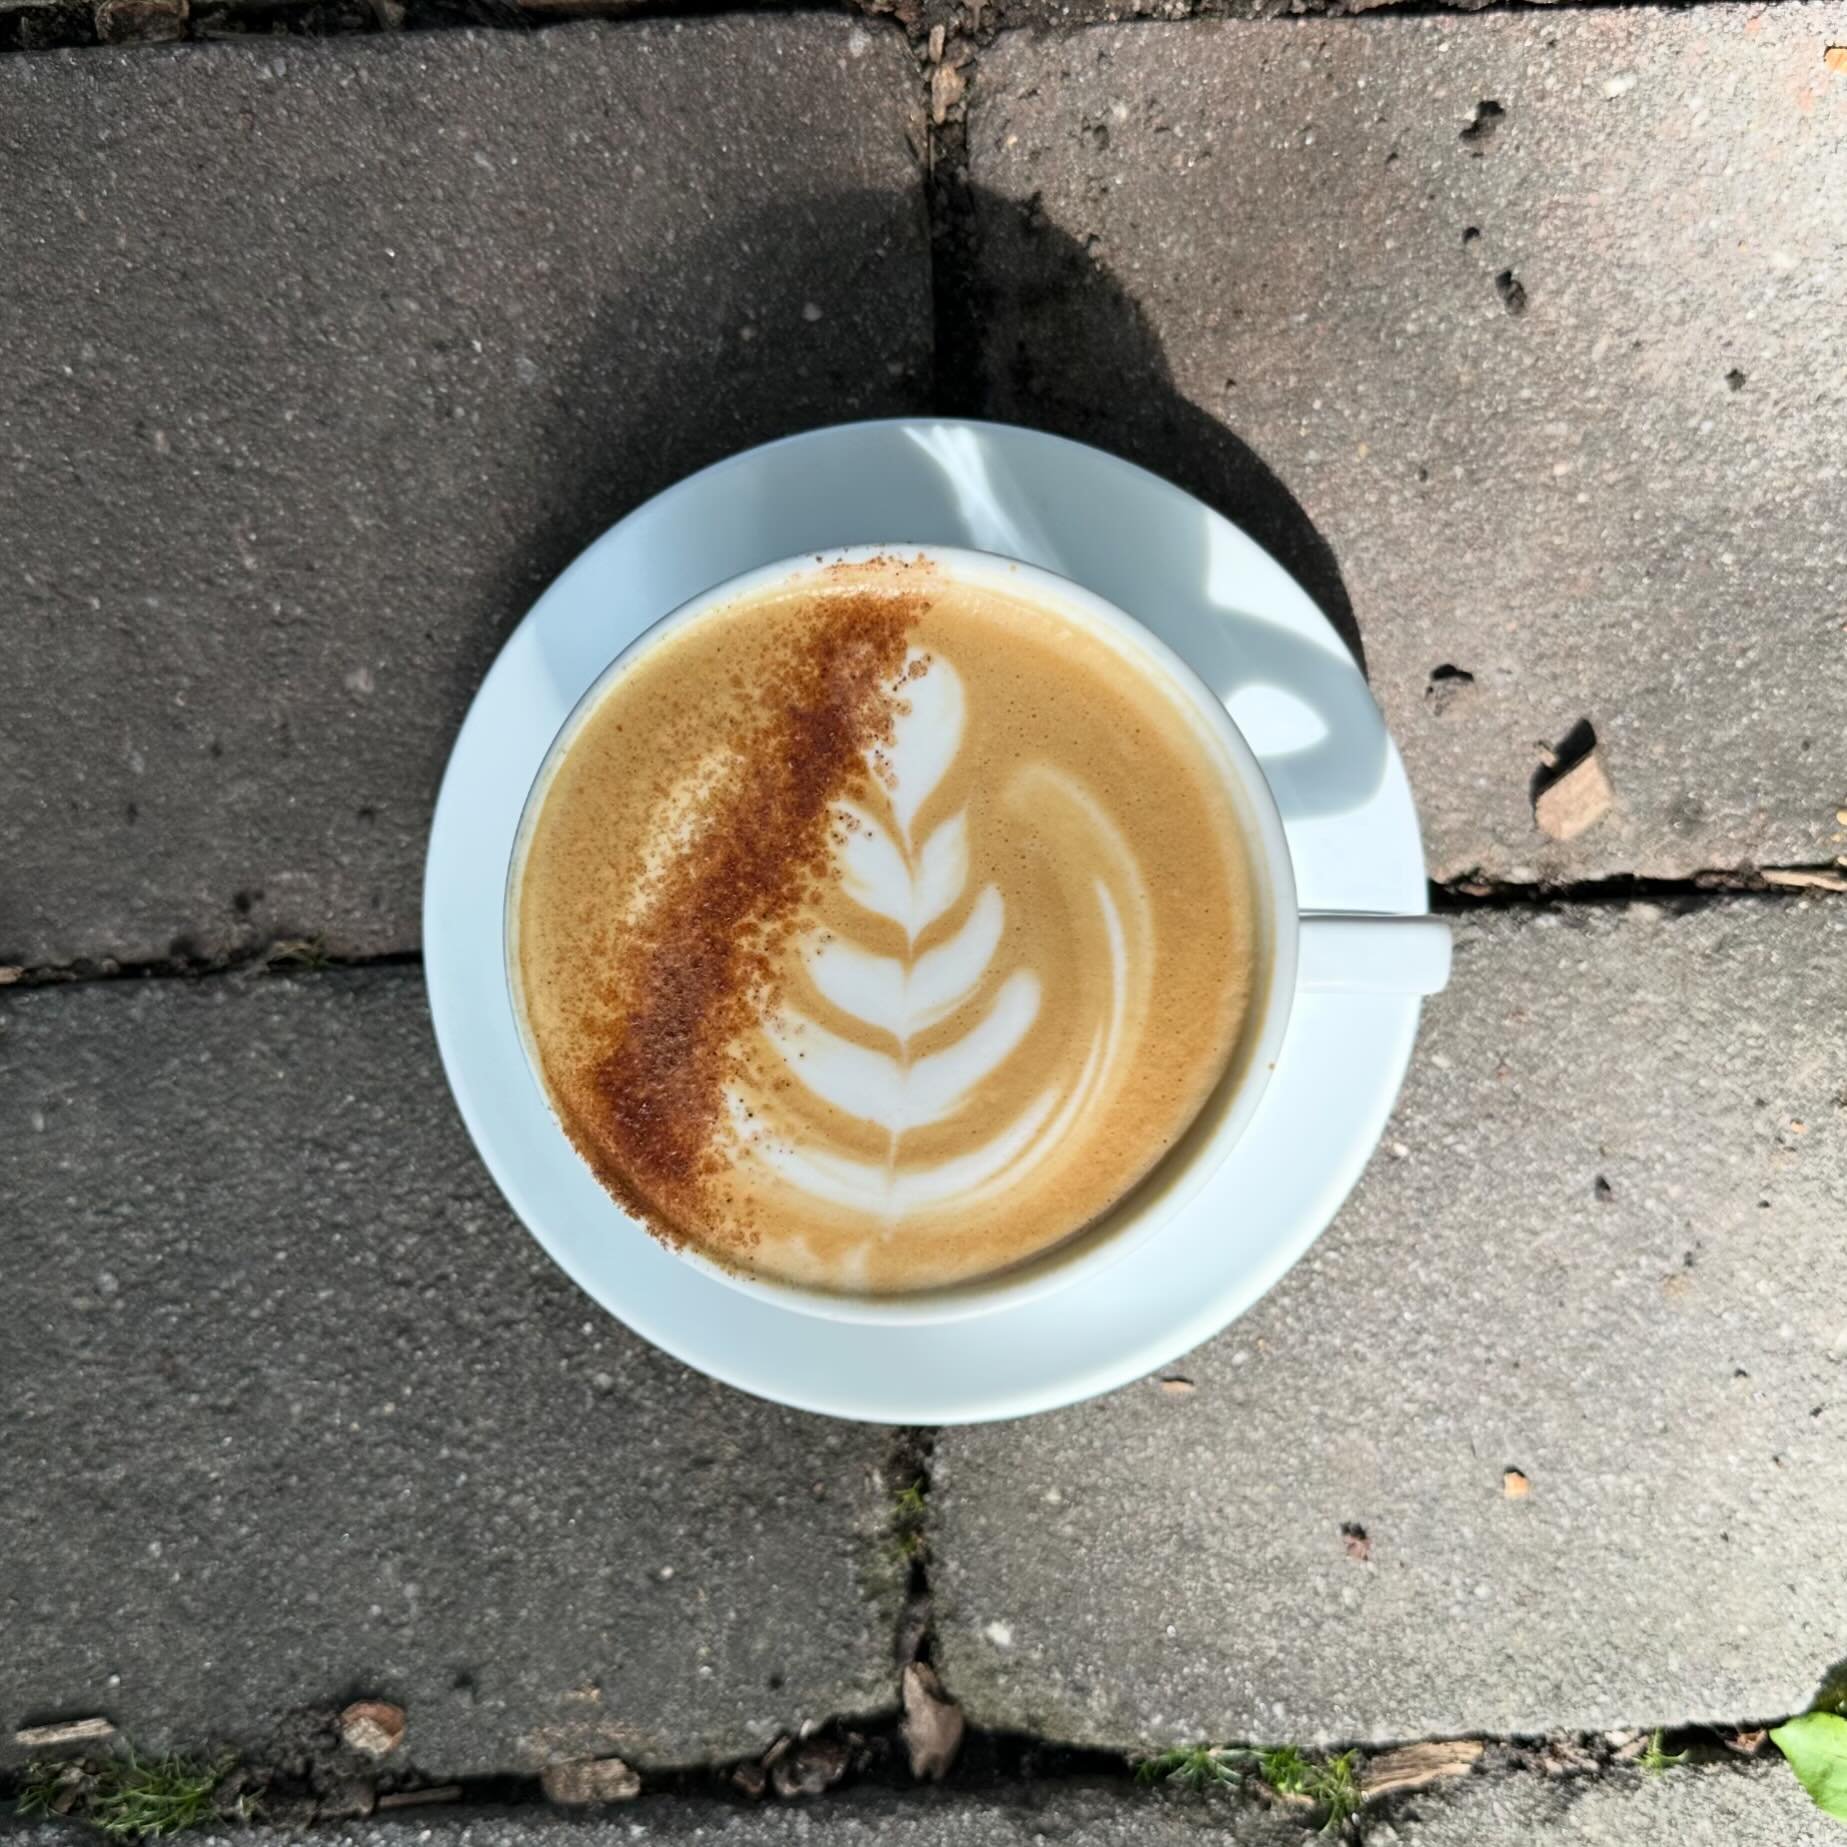 Weekend coffee vibes ☕️✨
_
#alabastercoffee #coffee #latte #williamsport